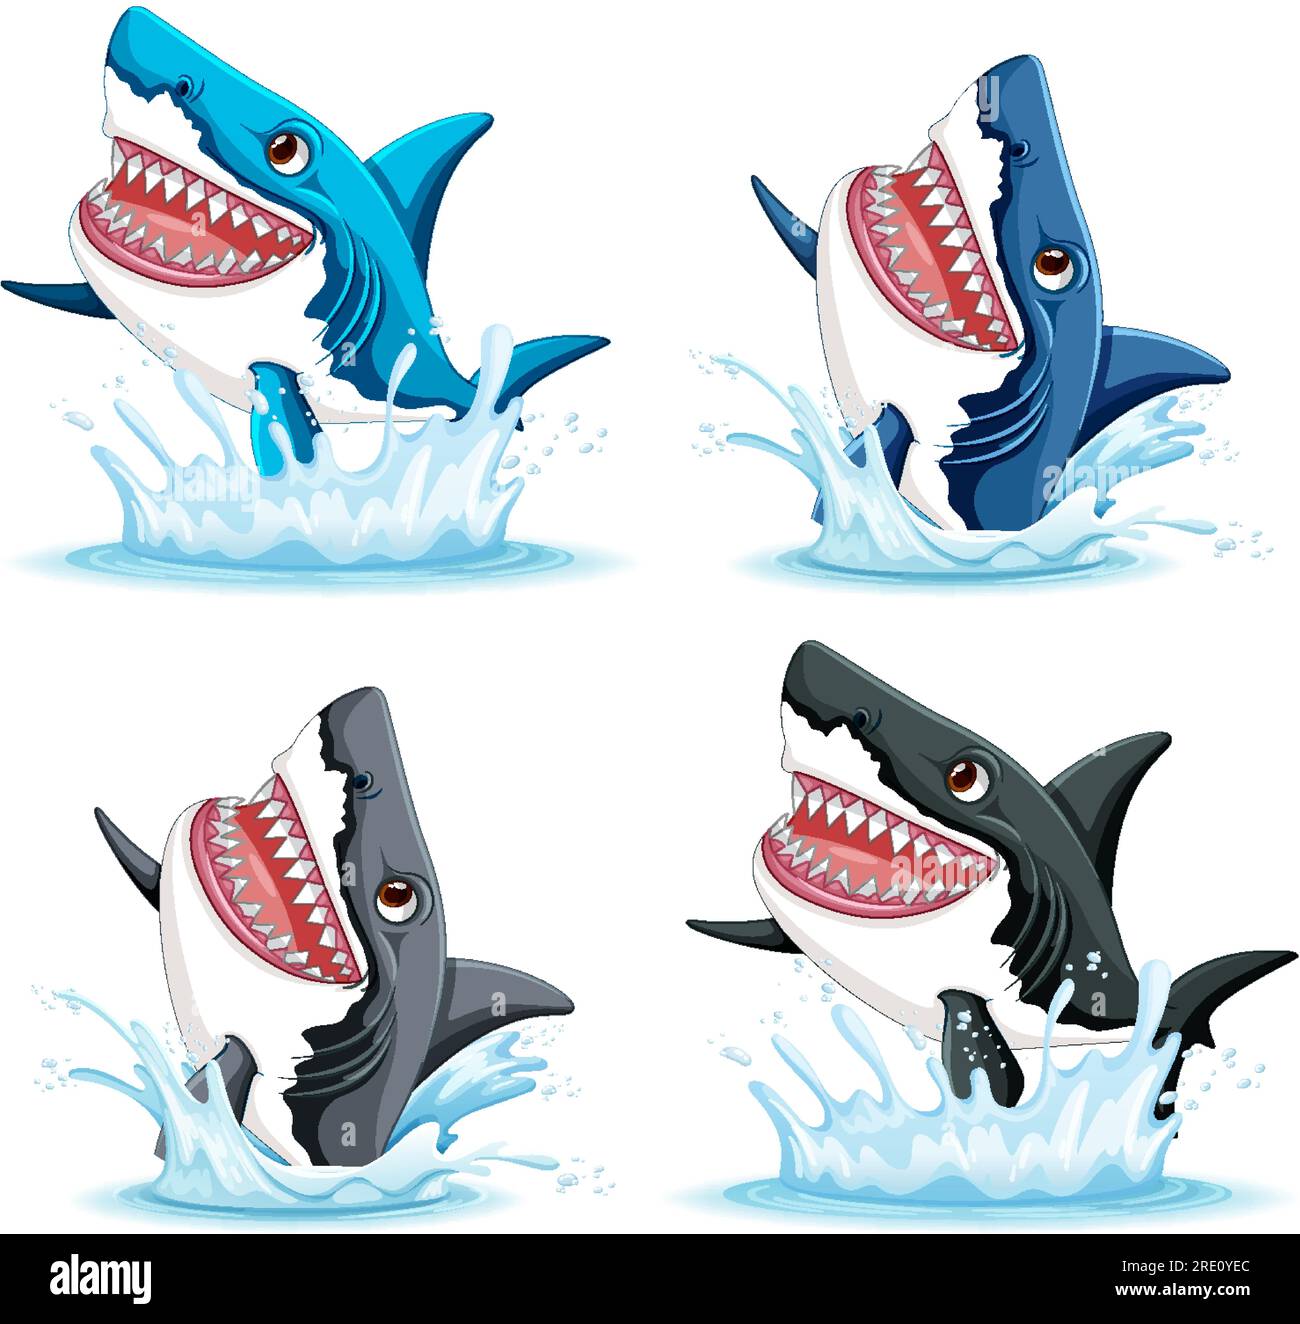 Smiling shark cartoon Stock Vector Image & Art - Alamy